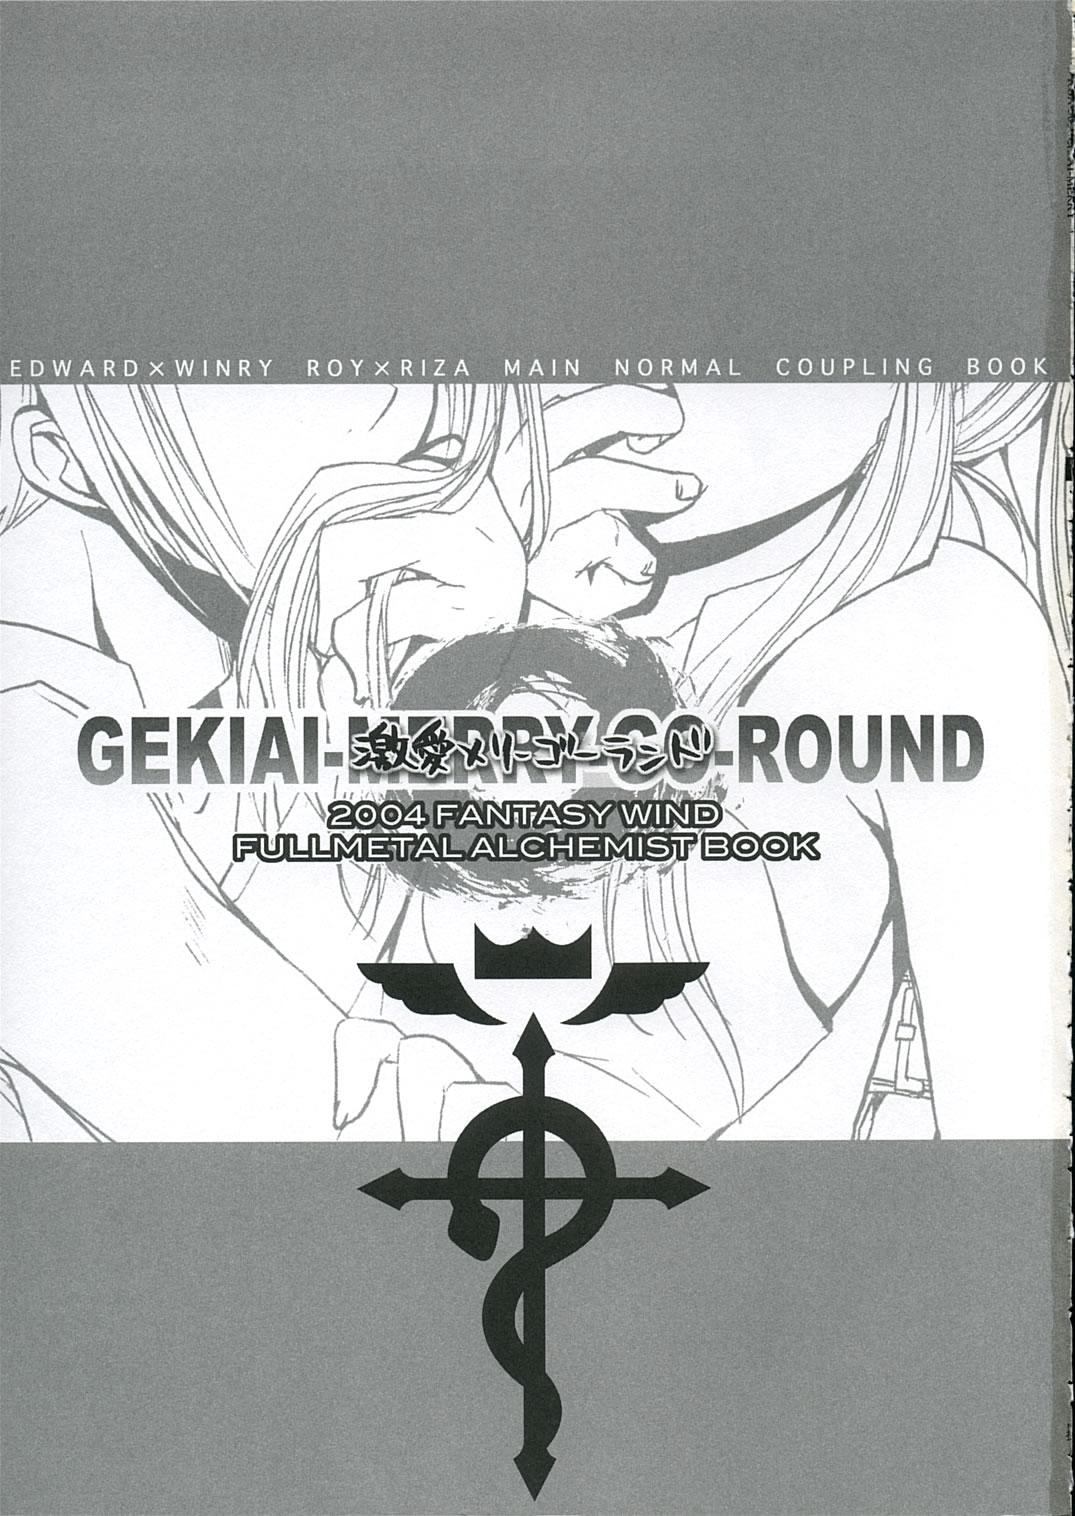 [FANTASY WIND] GEKIAI-MERRY-GO-ROUND (fullmetal alchemist) 1